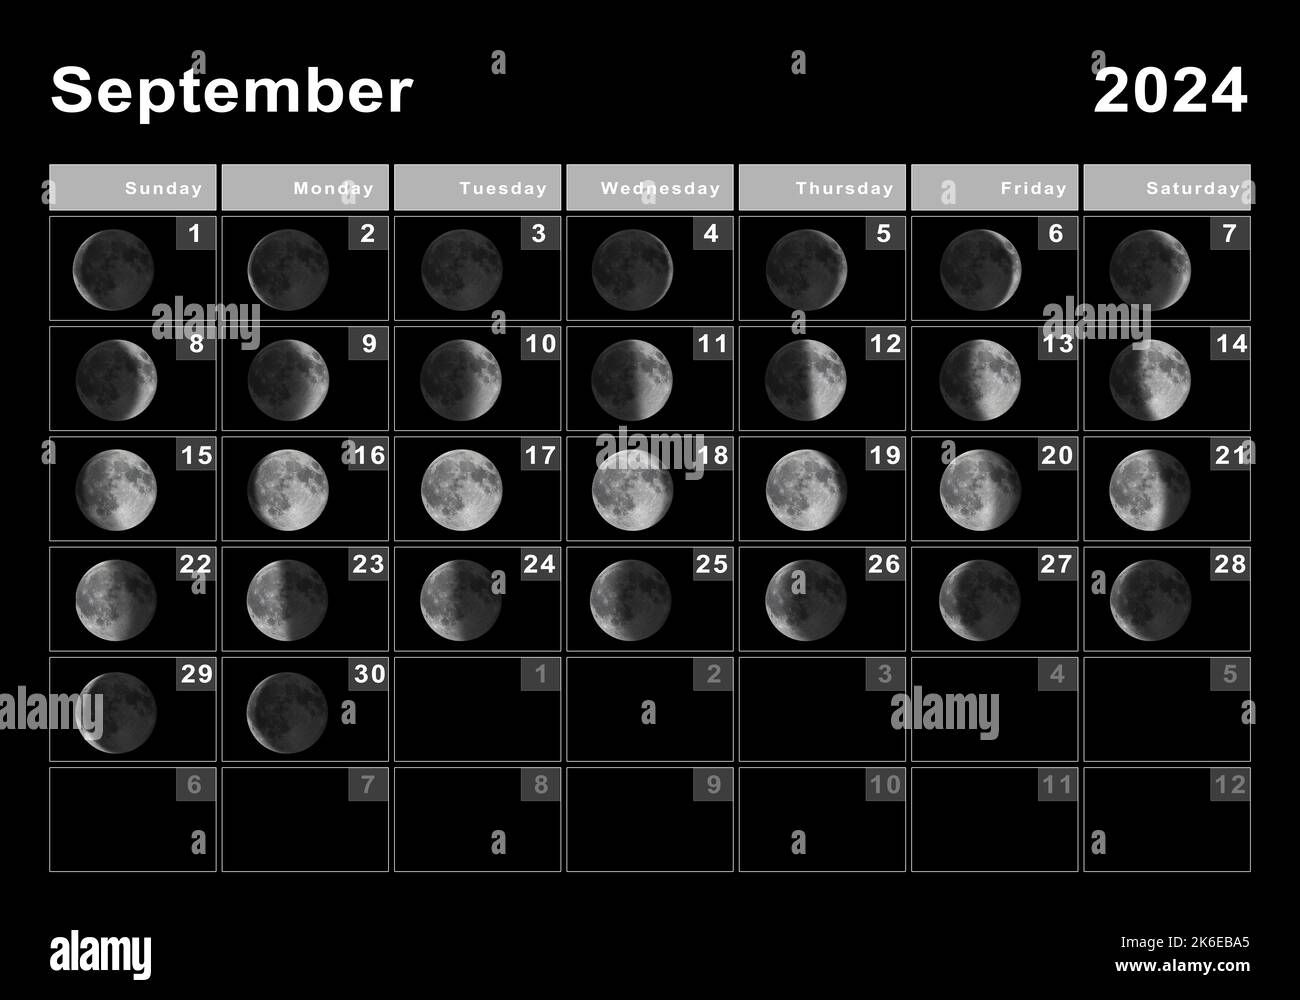 September 2024 Lunar calendar, Moon cycles, Moon Phases Stock Photo Alamy